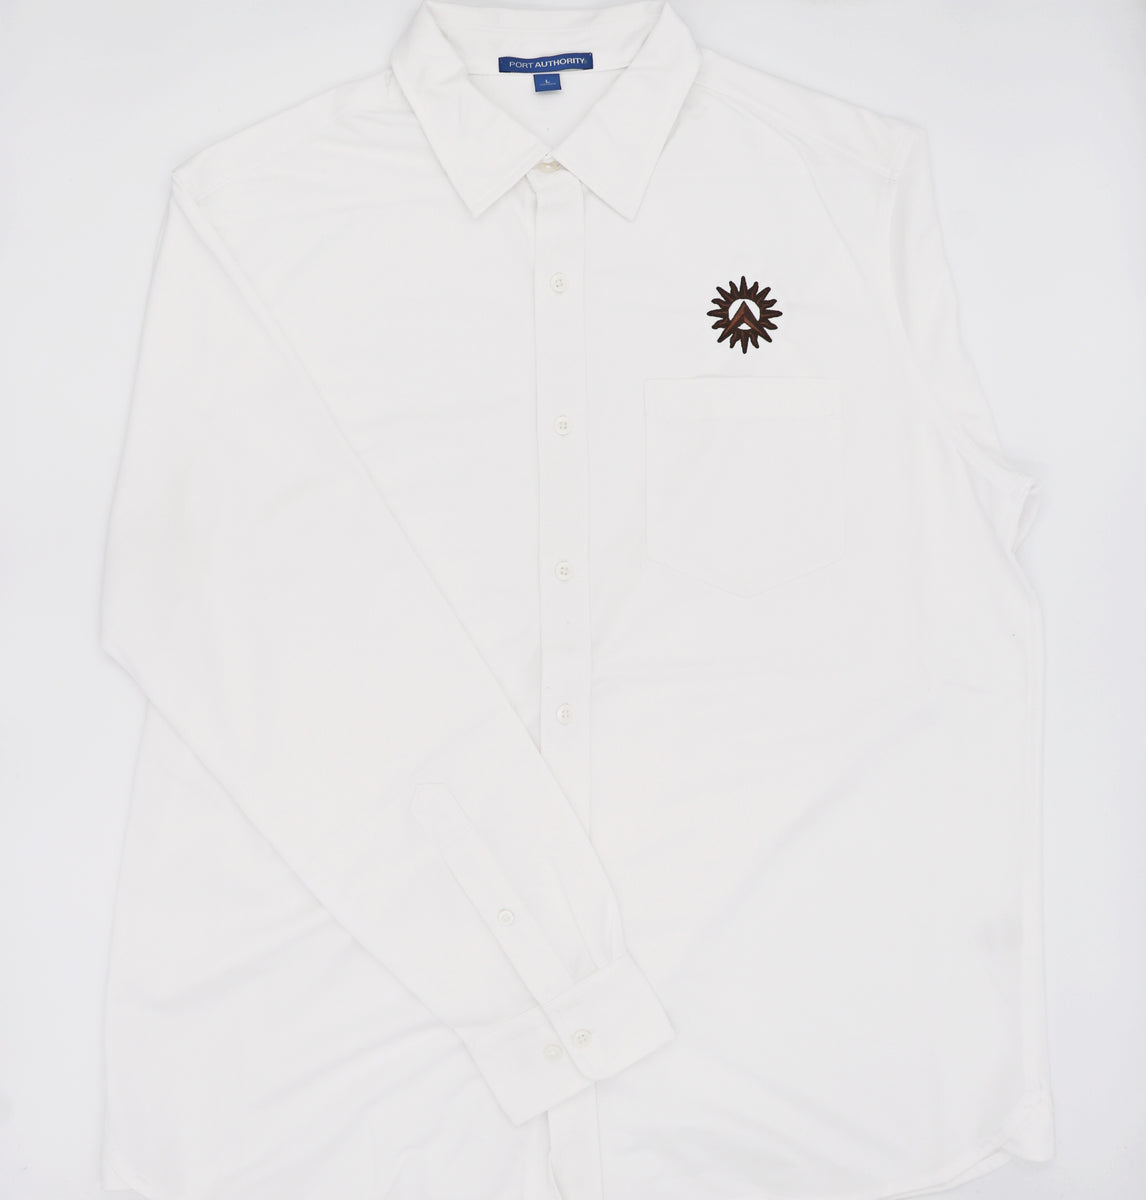 Port Authority K570 Dimension Knit Dress Shirt–Black (3XL)